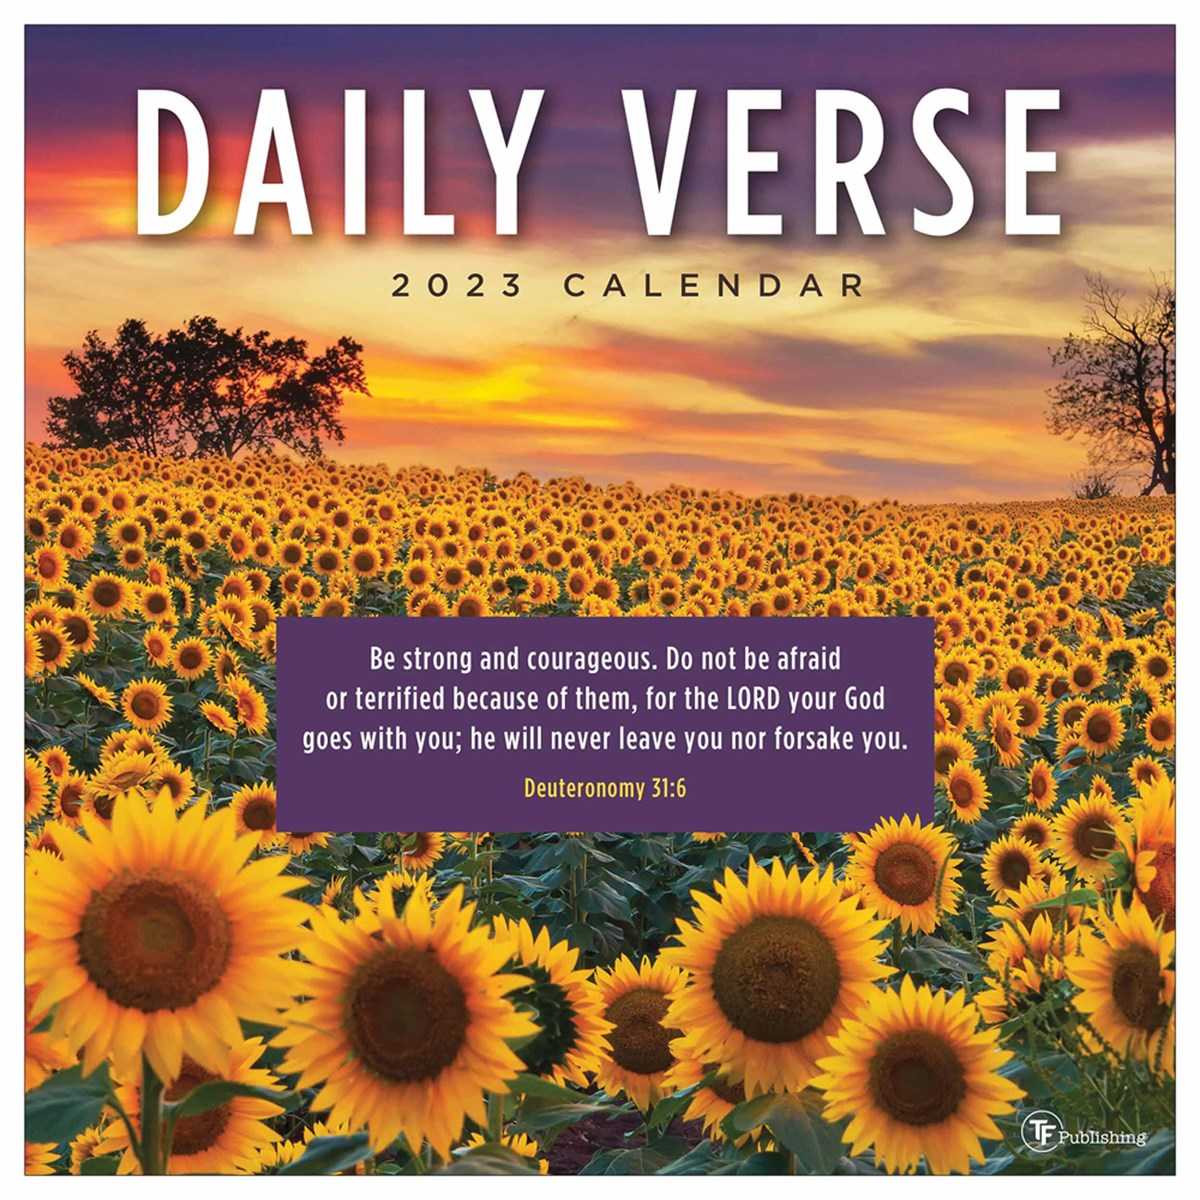 Daily Verse 2023 Calendars